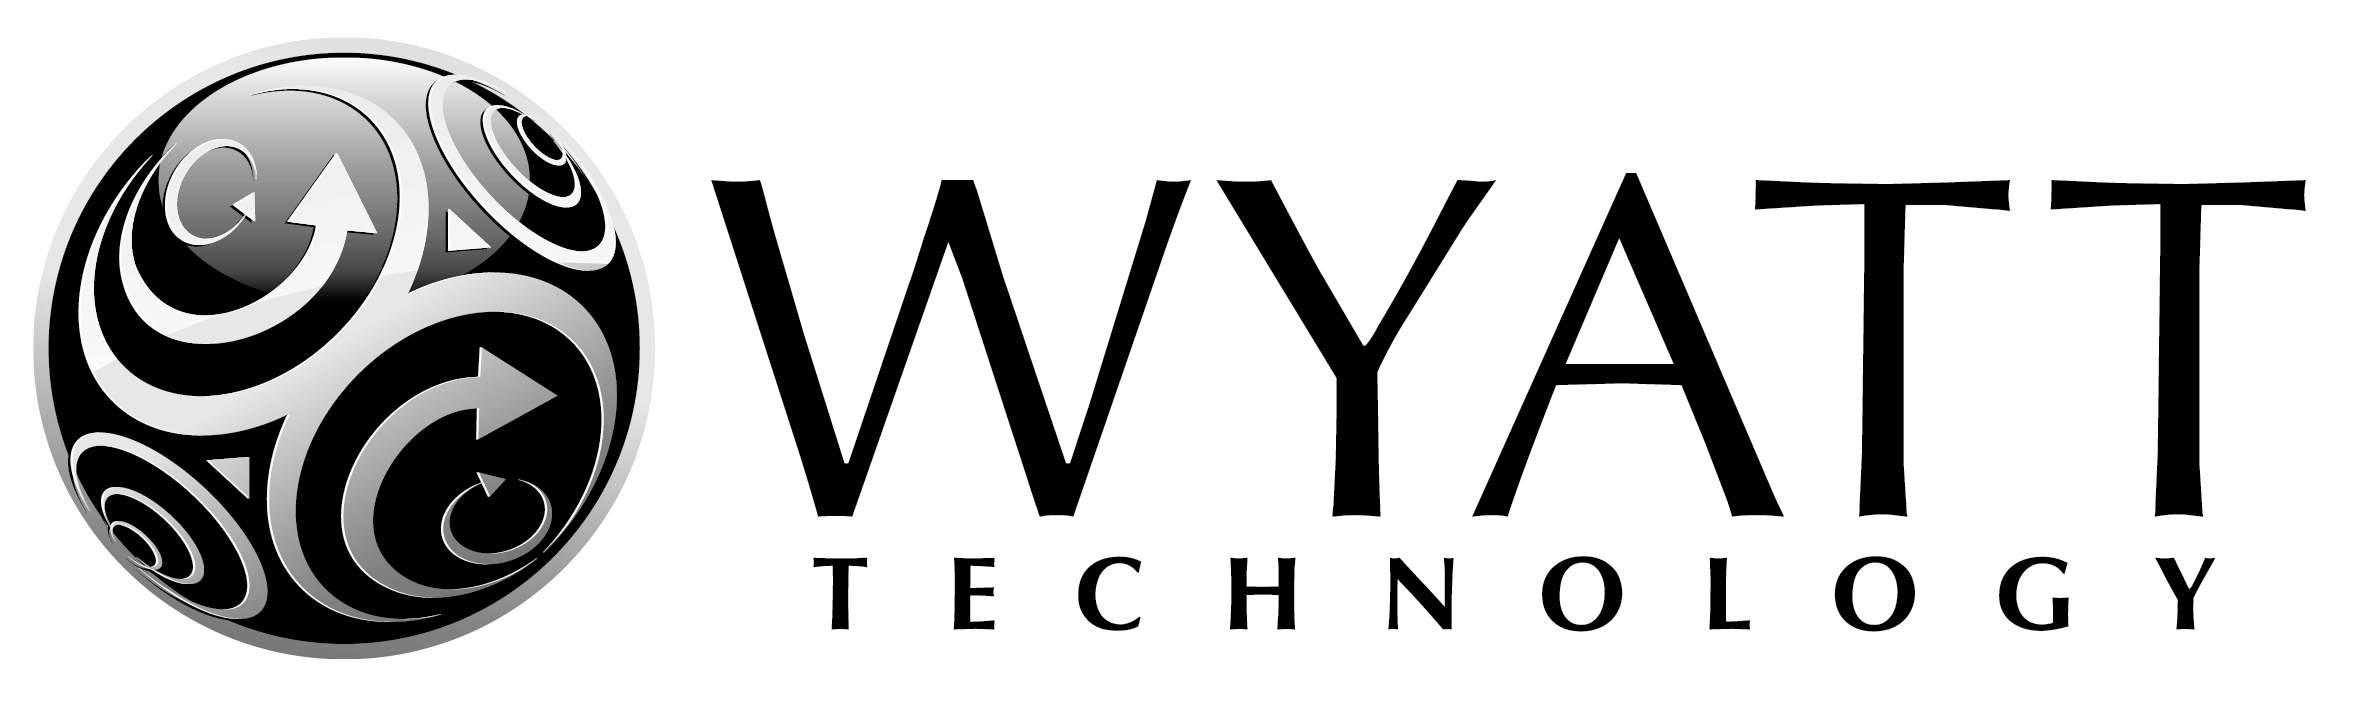 Wyatt_logo_New_Logo_only.jpg